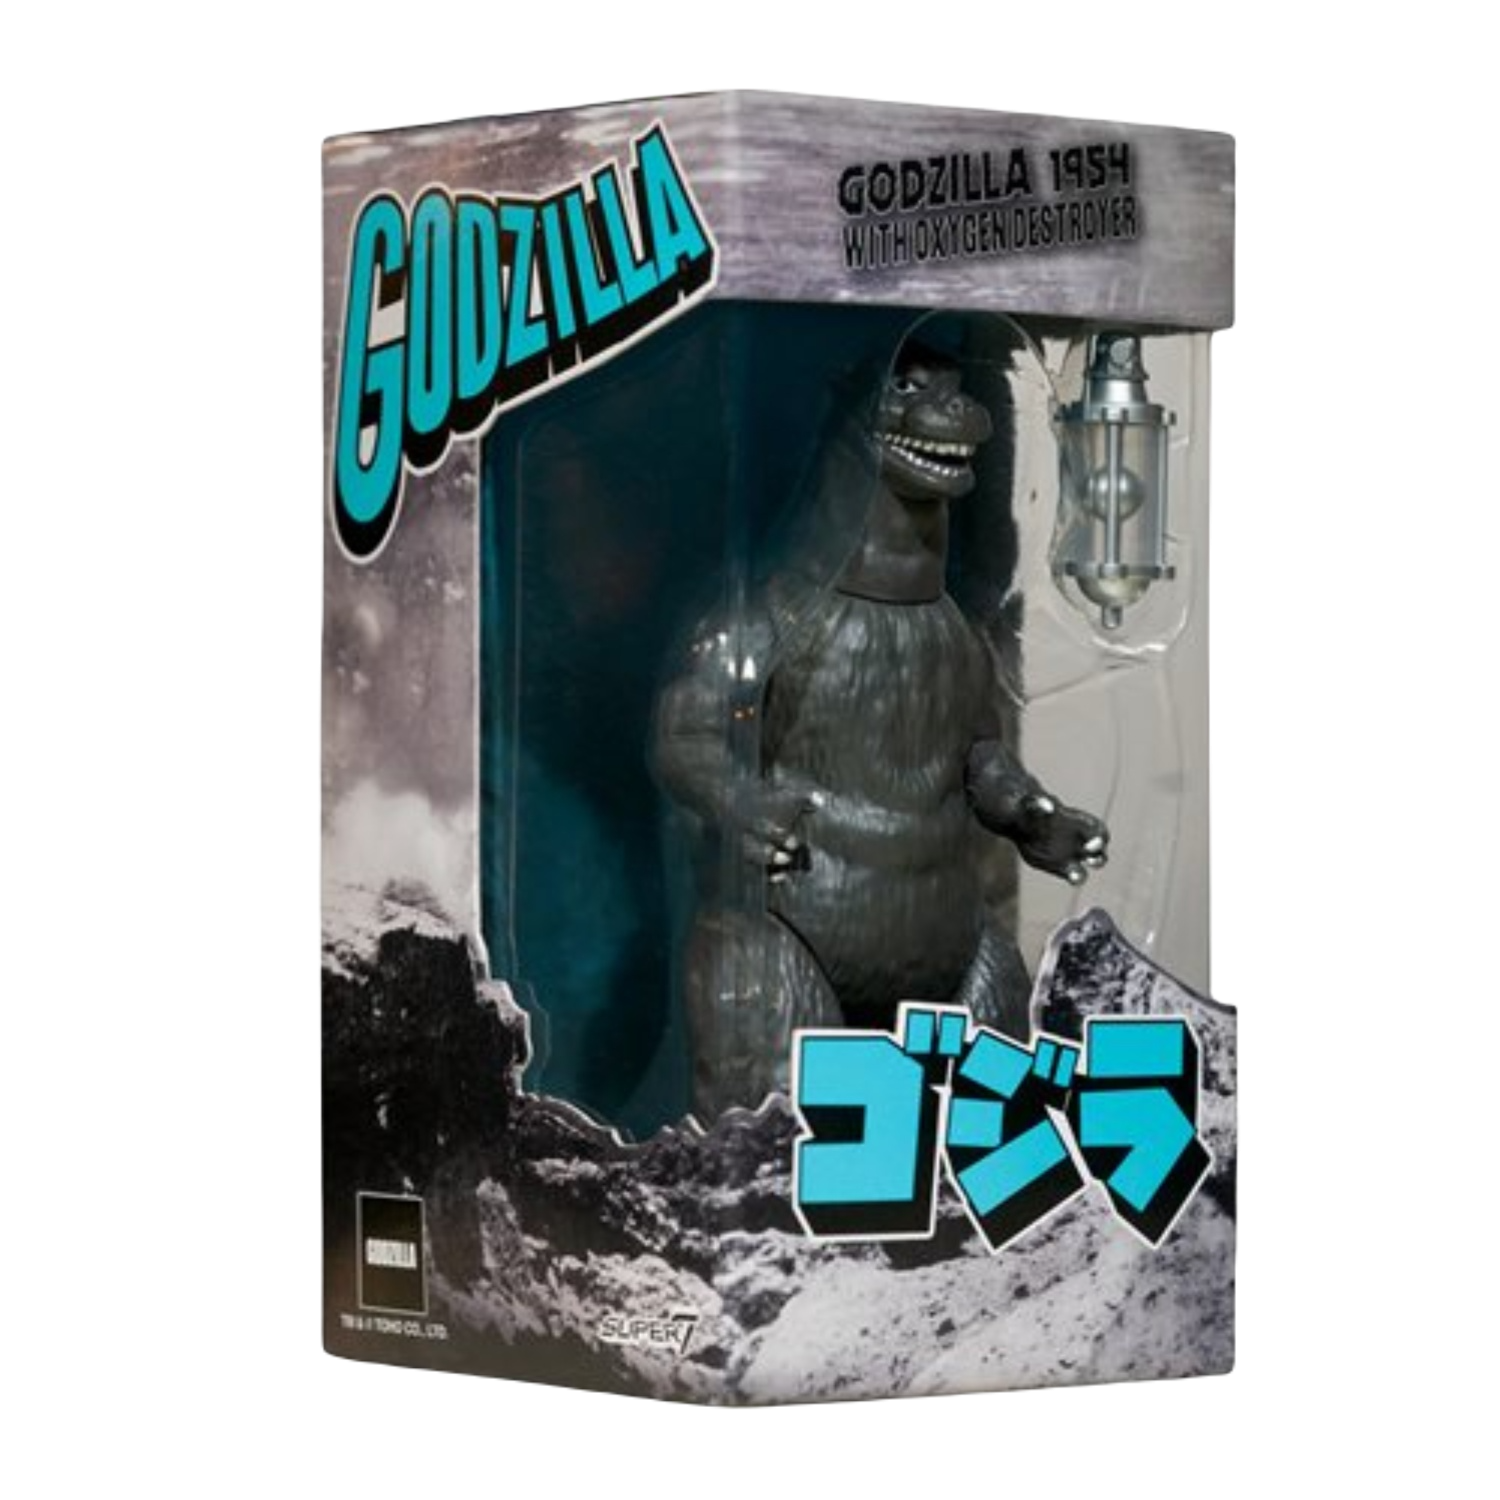 Godzilla 54 Silver Screen with Oxygen Bomb